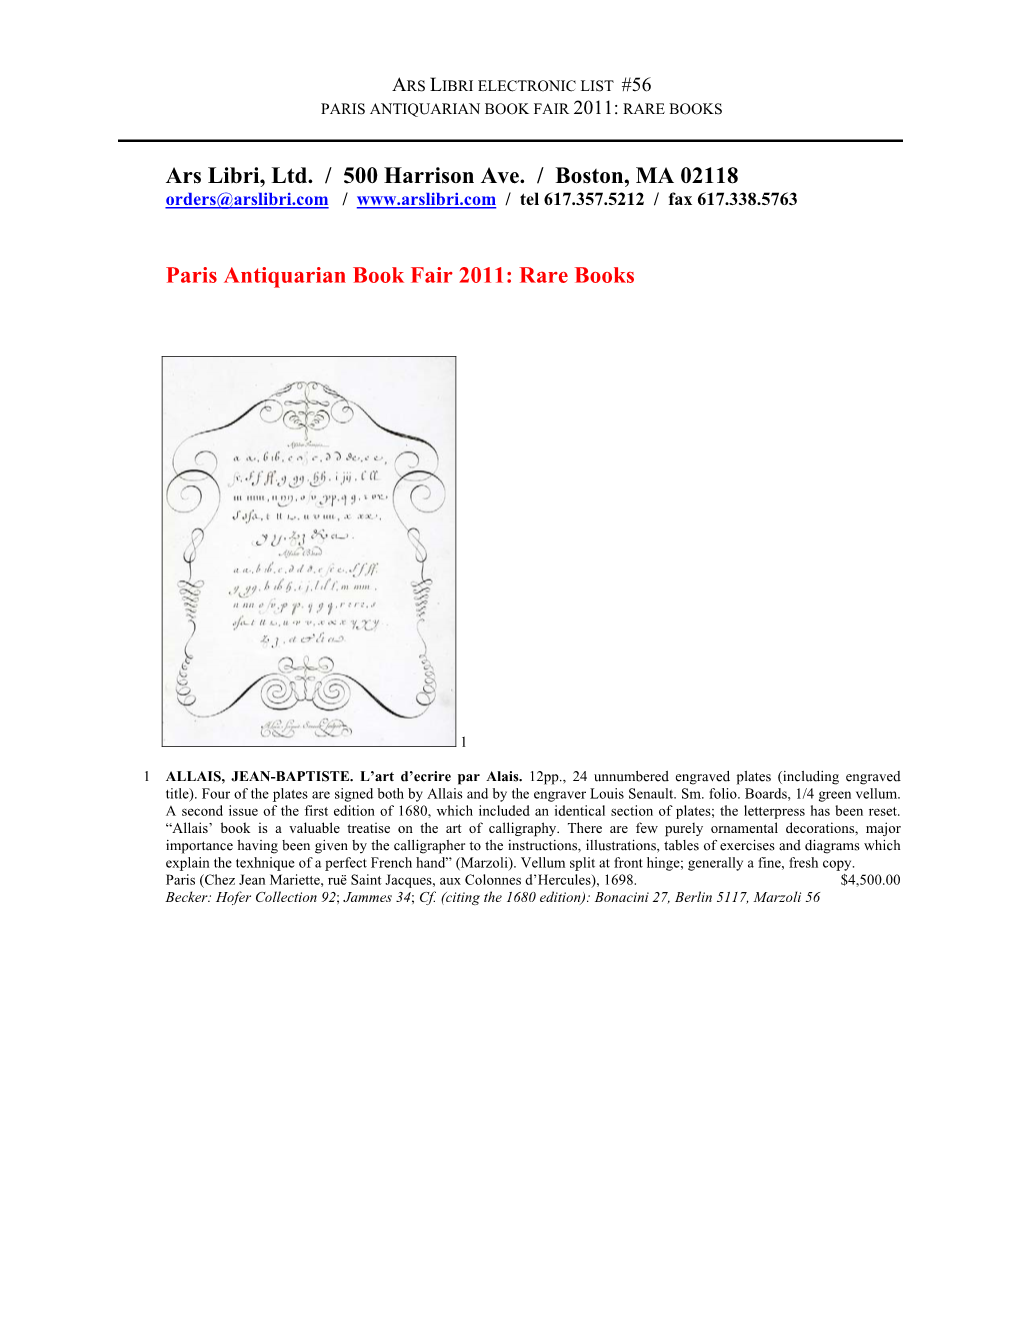 Ars Libri, Ltd. / 500 Harrison Ave. / Boston, MA 02118 Paris